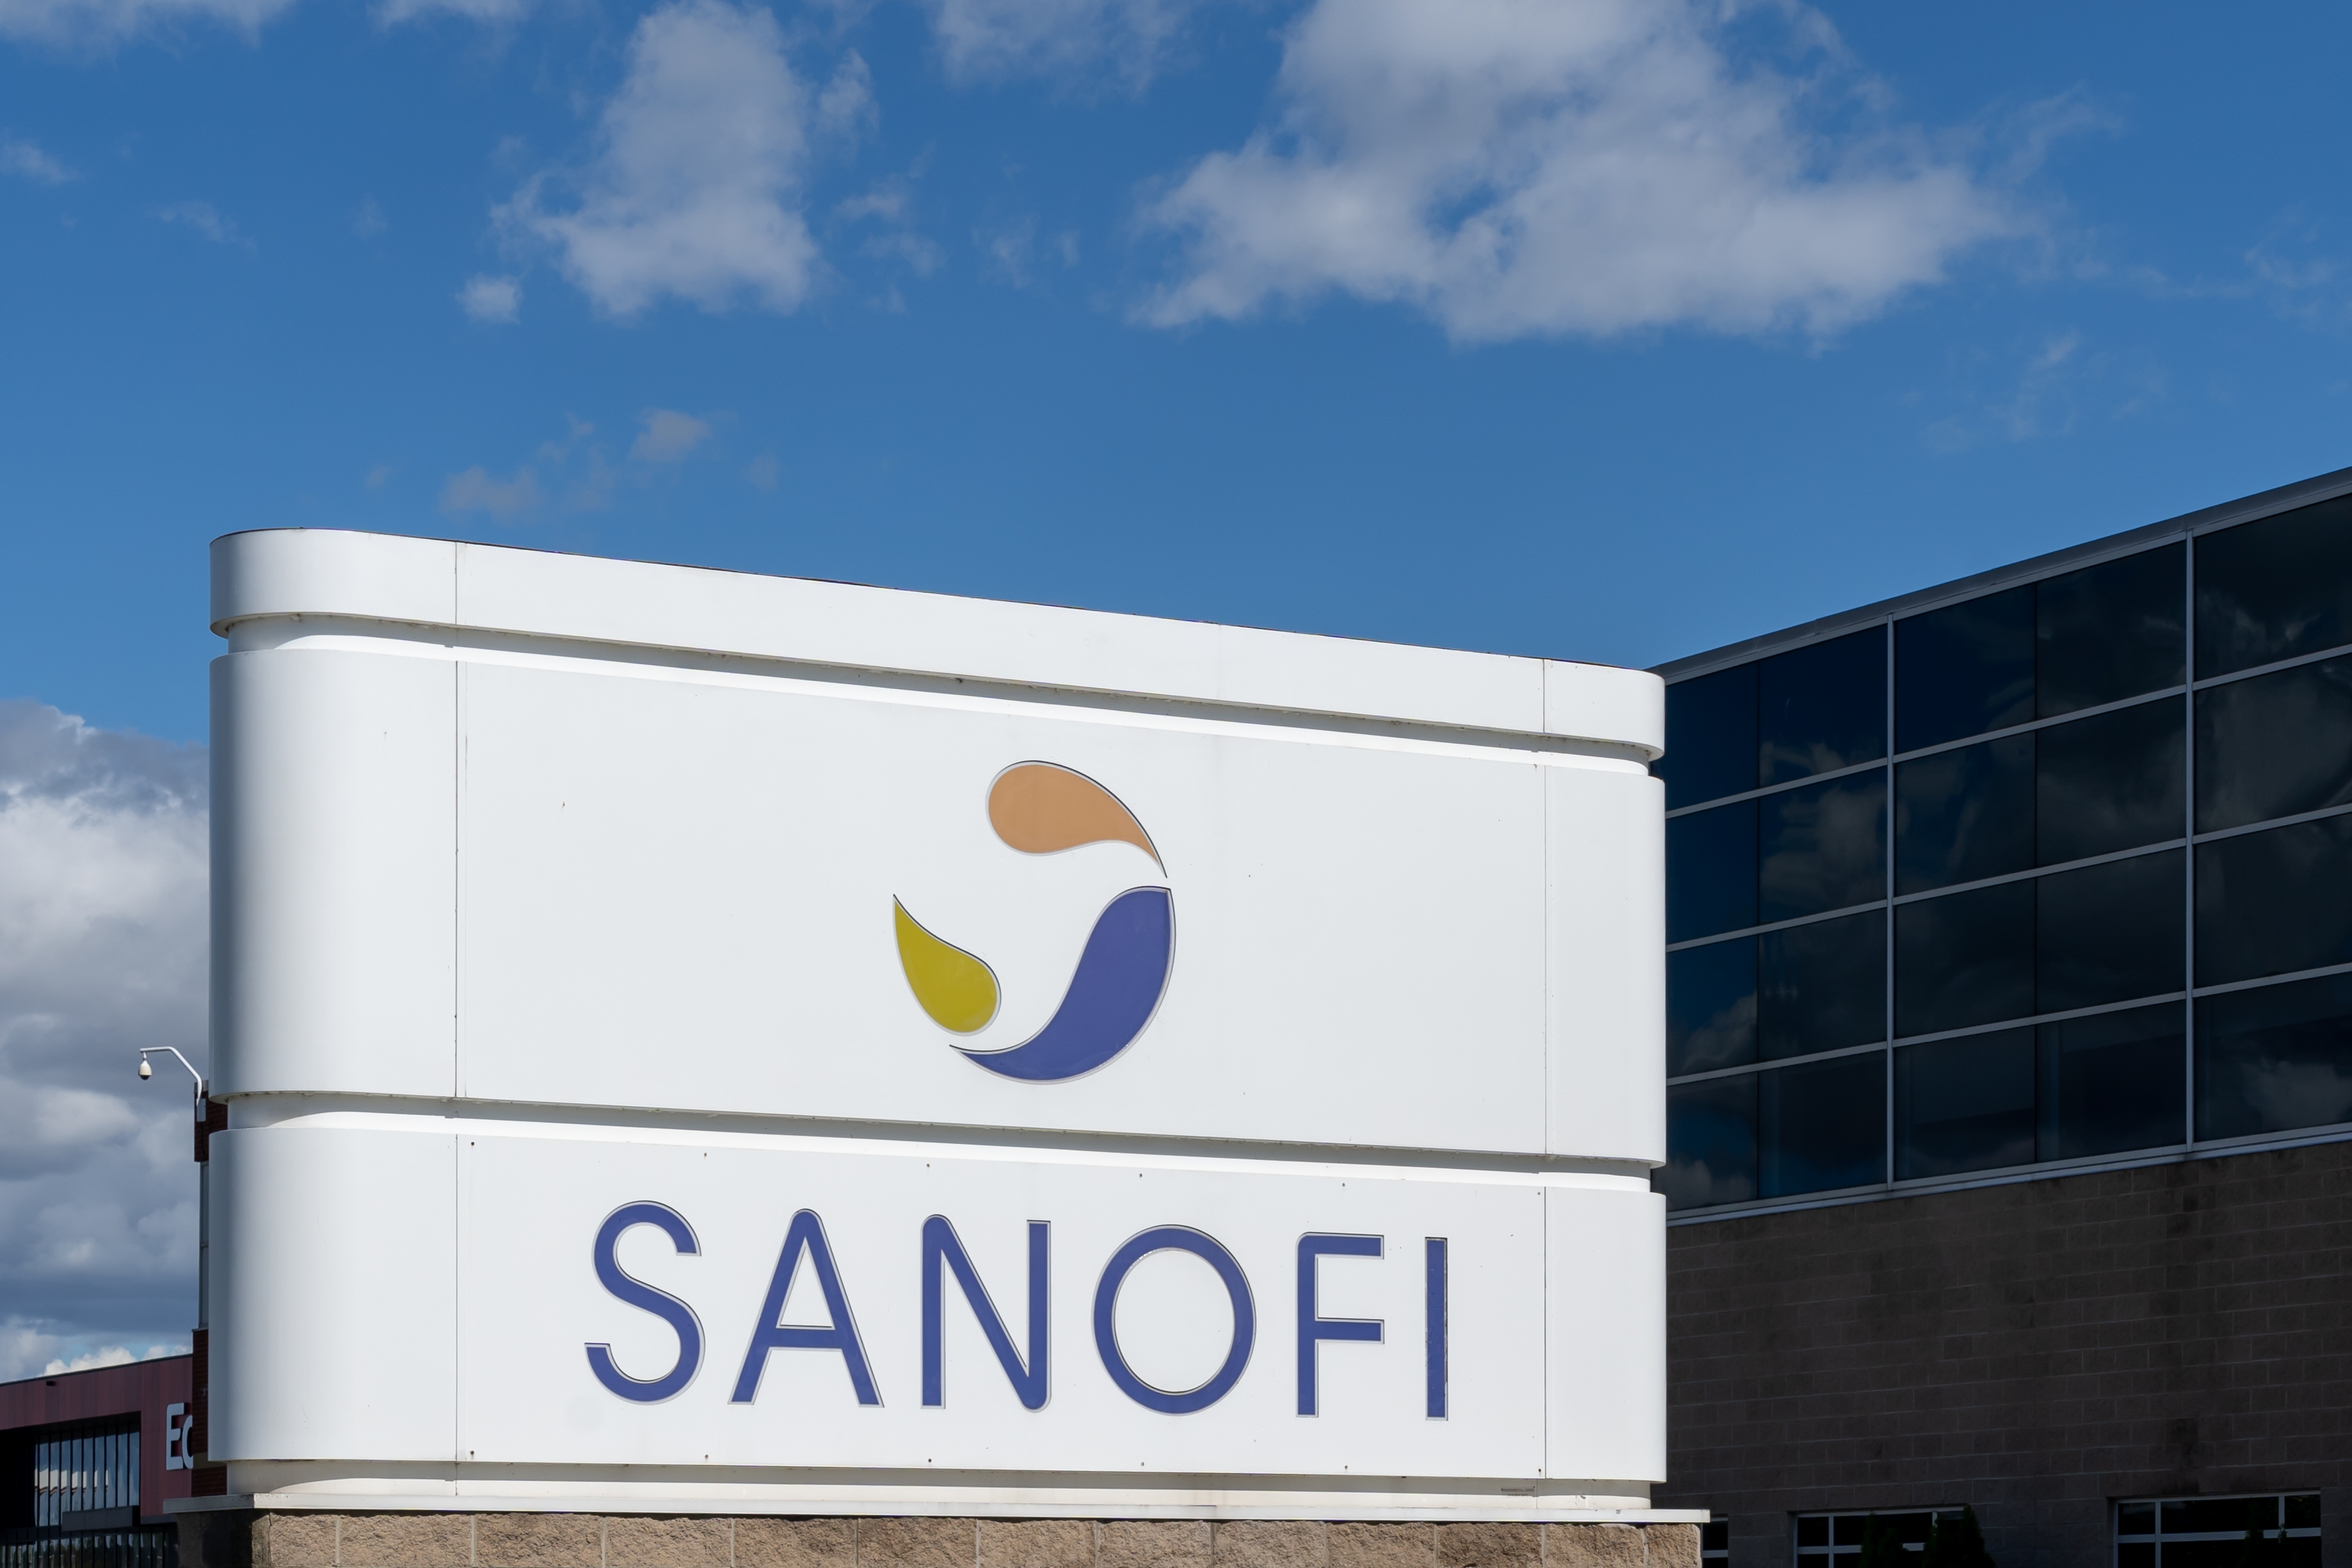 Sanofi enters agreement with Janssen to develop E. coli vaccine candidate